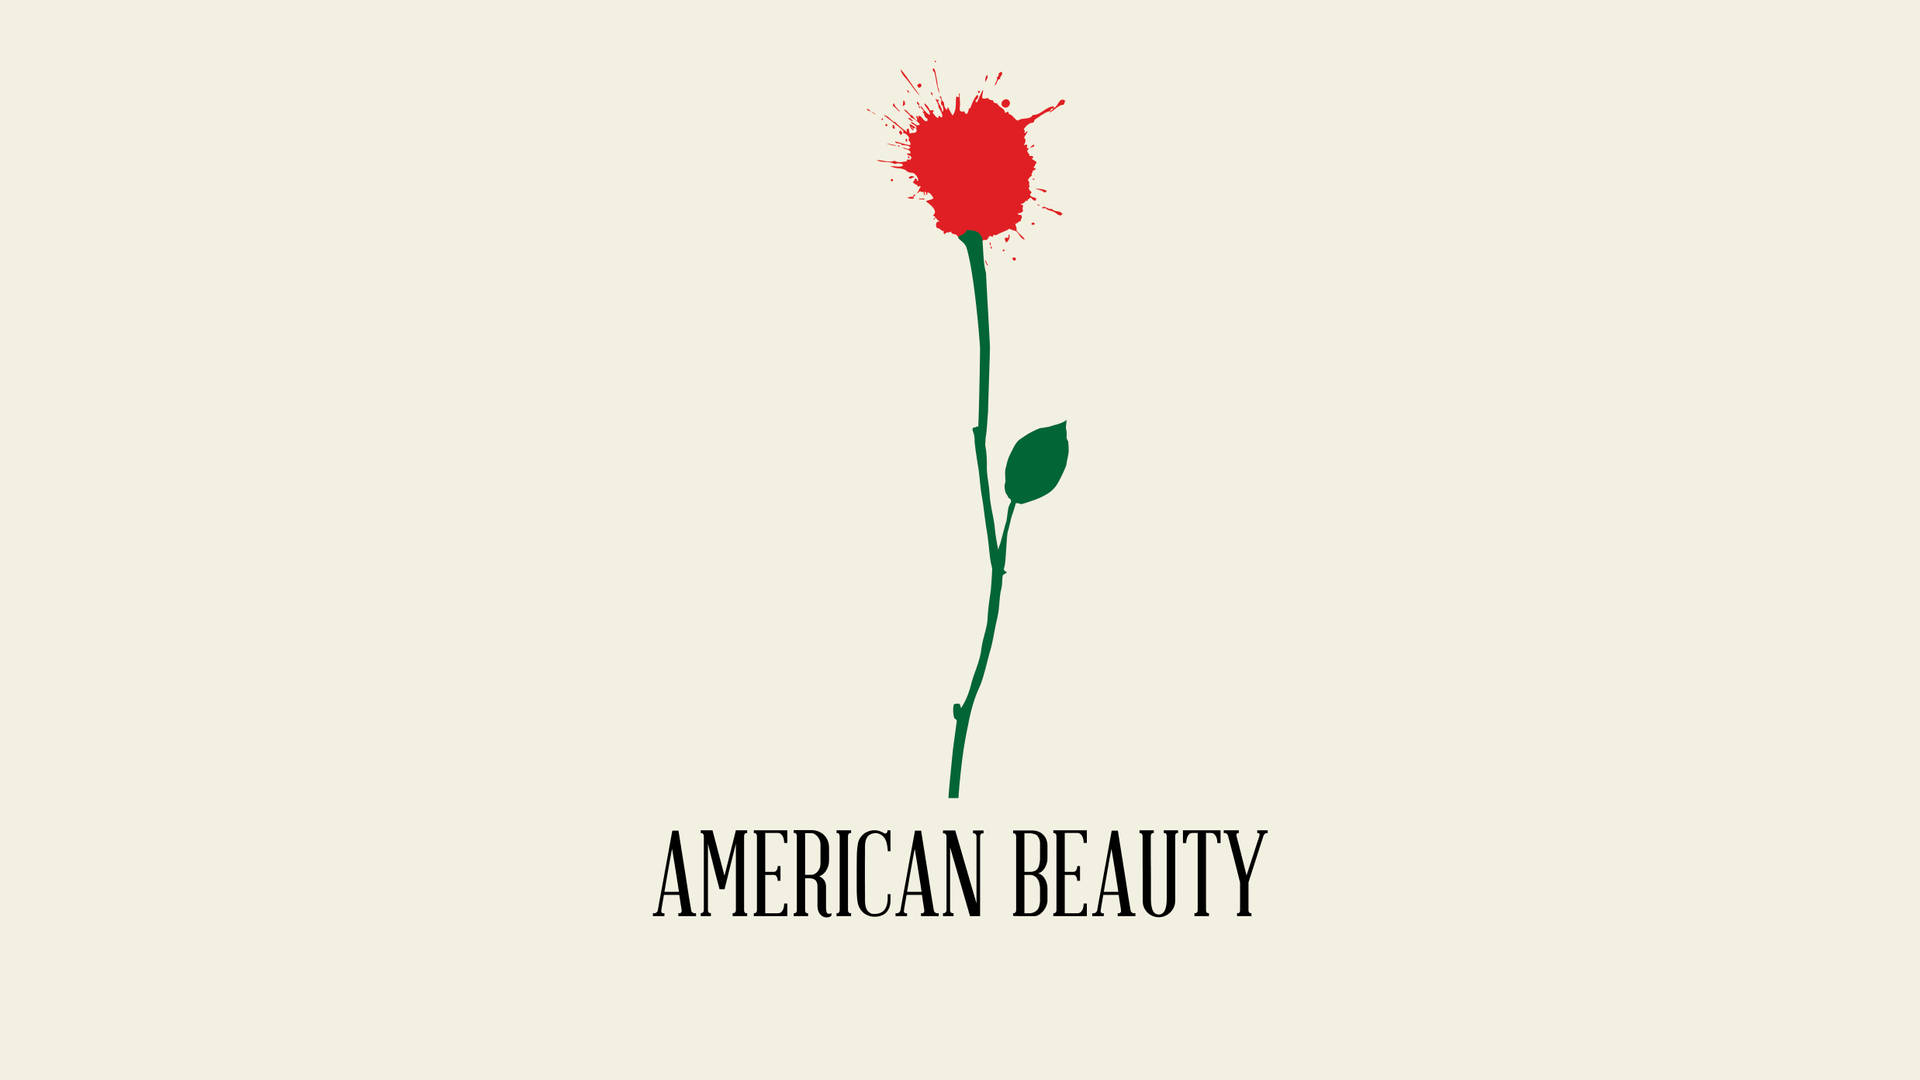 American Beauty Rose Poster Wallpaper